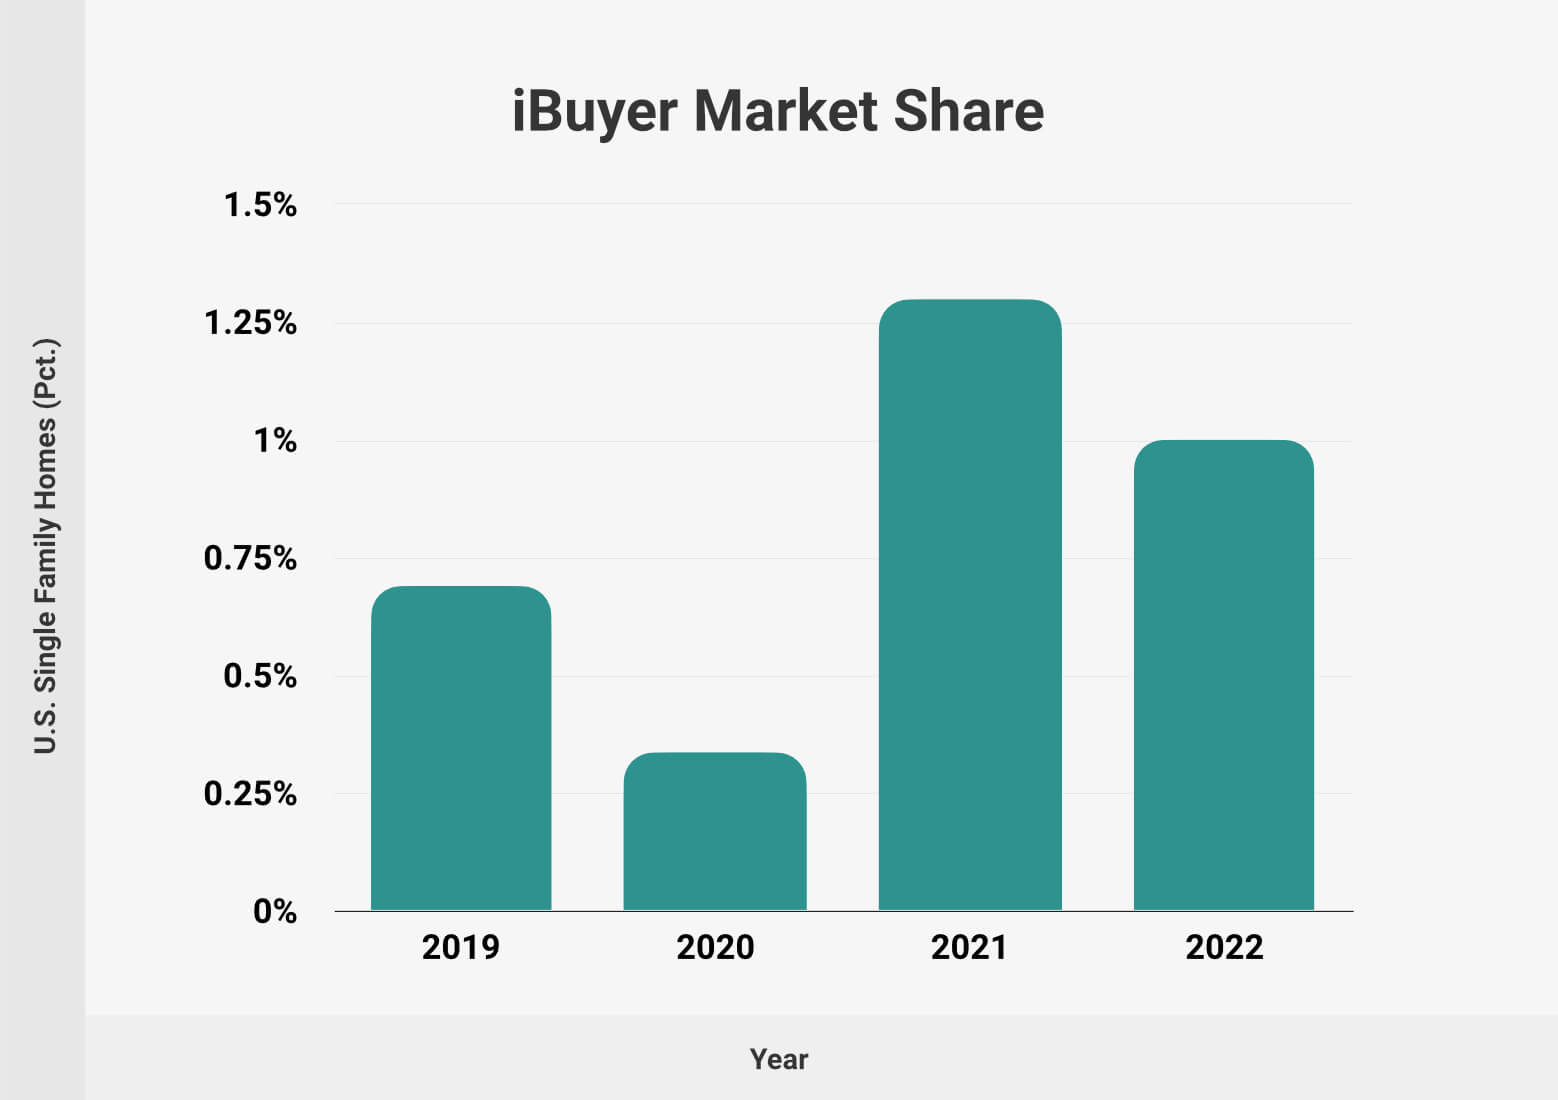 iBuyer Market Share - Total